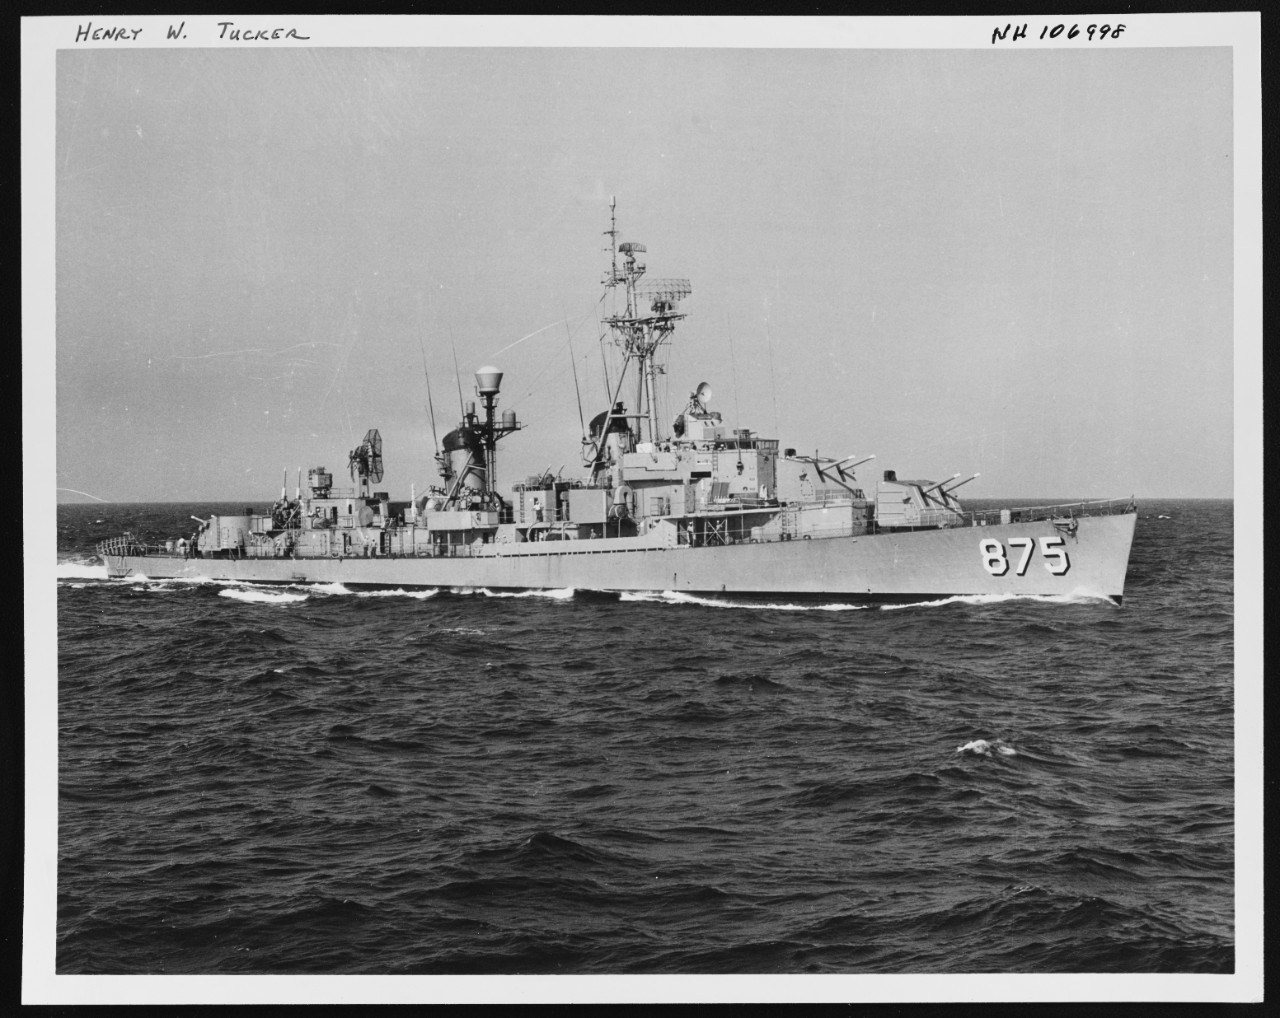 Photo # NH 106998  USS Henry W. Tucker